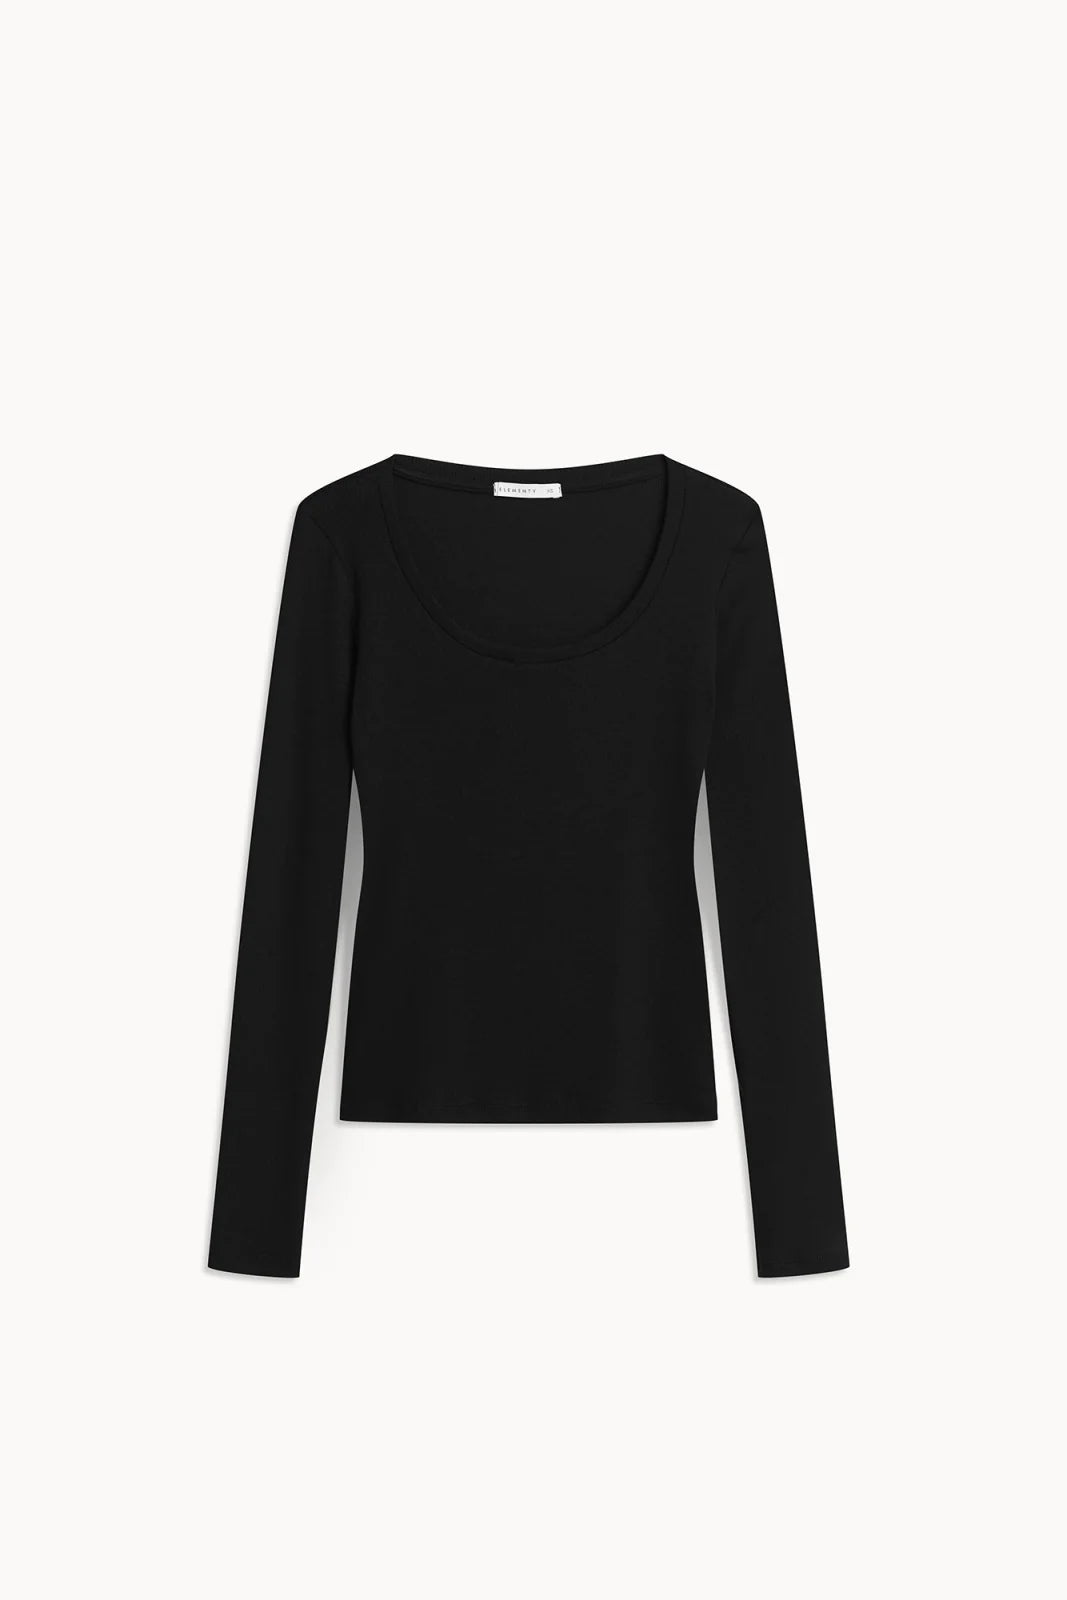 Les Goodies - Elementy Wear Nadine Black Long-Sleeve T-Shirt